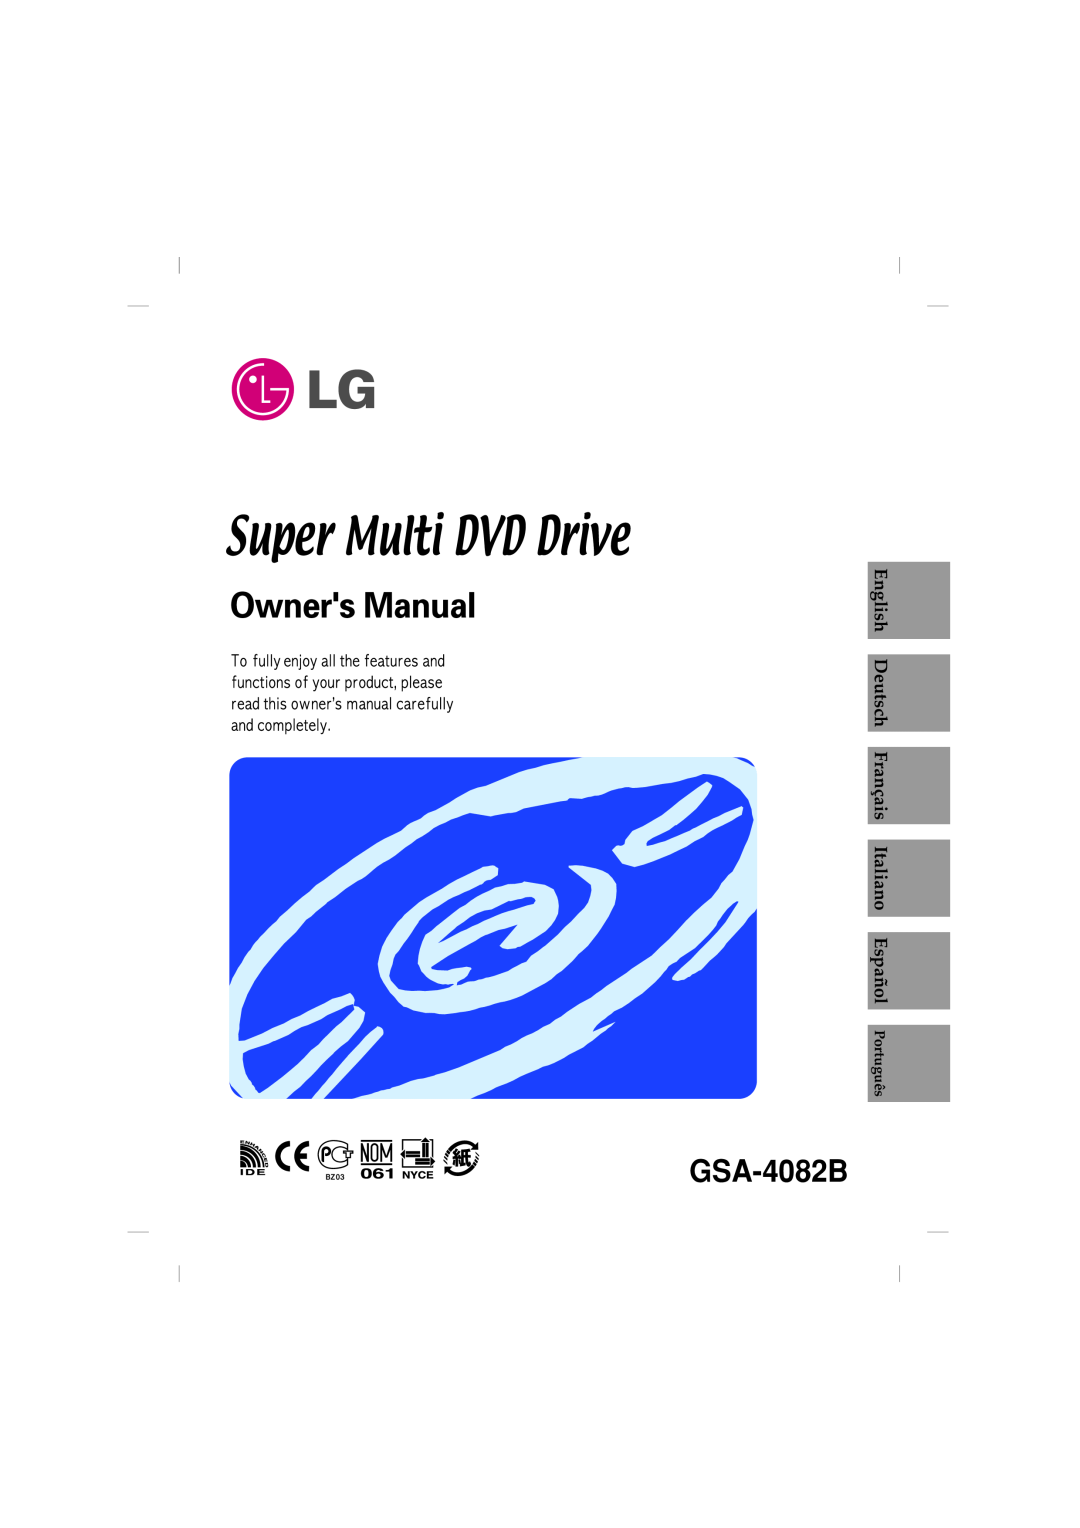 LG Electronics GSA-4082B manual English Deutsch Français Italiano Español Português, Super Multi DVD Drive 